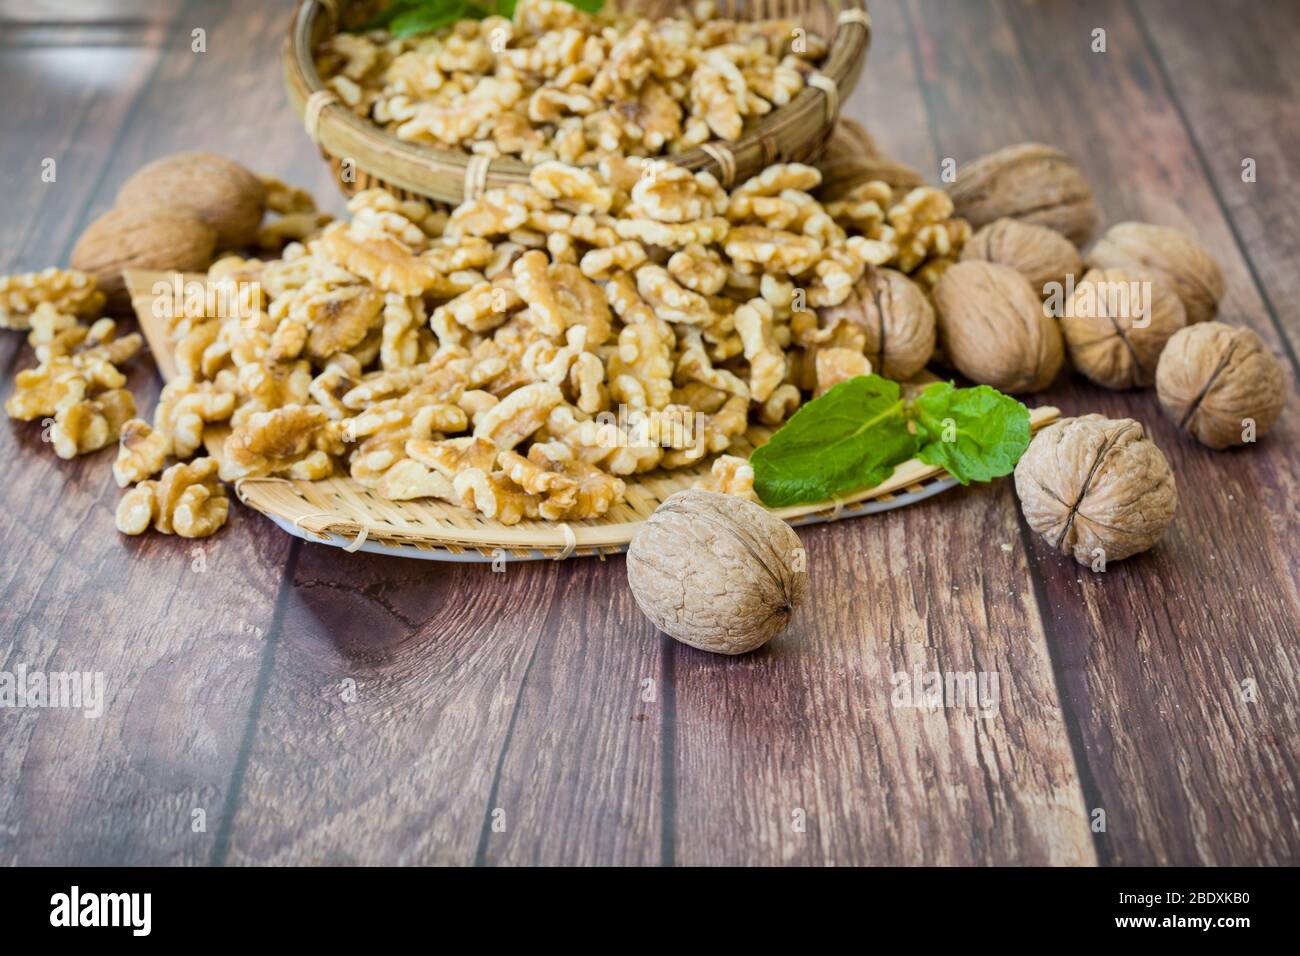 Organic heathy food - walnut Stock Photo